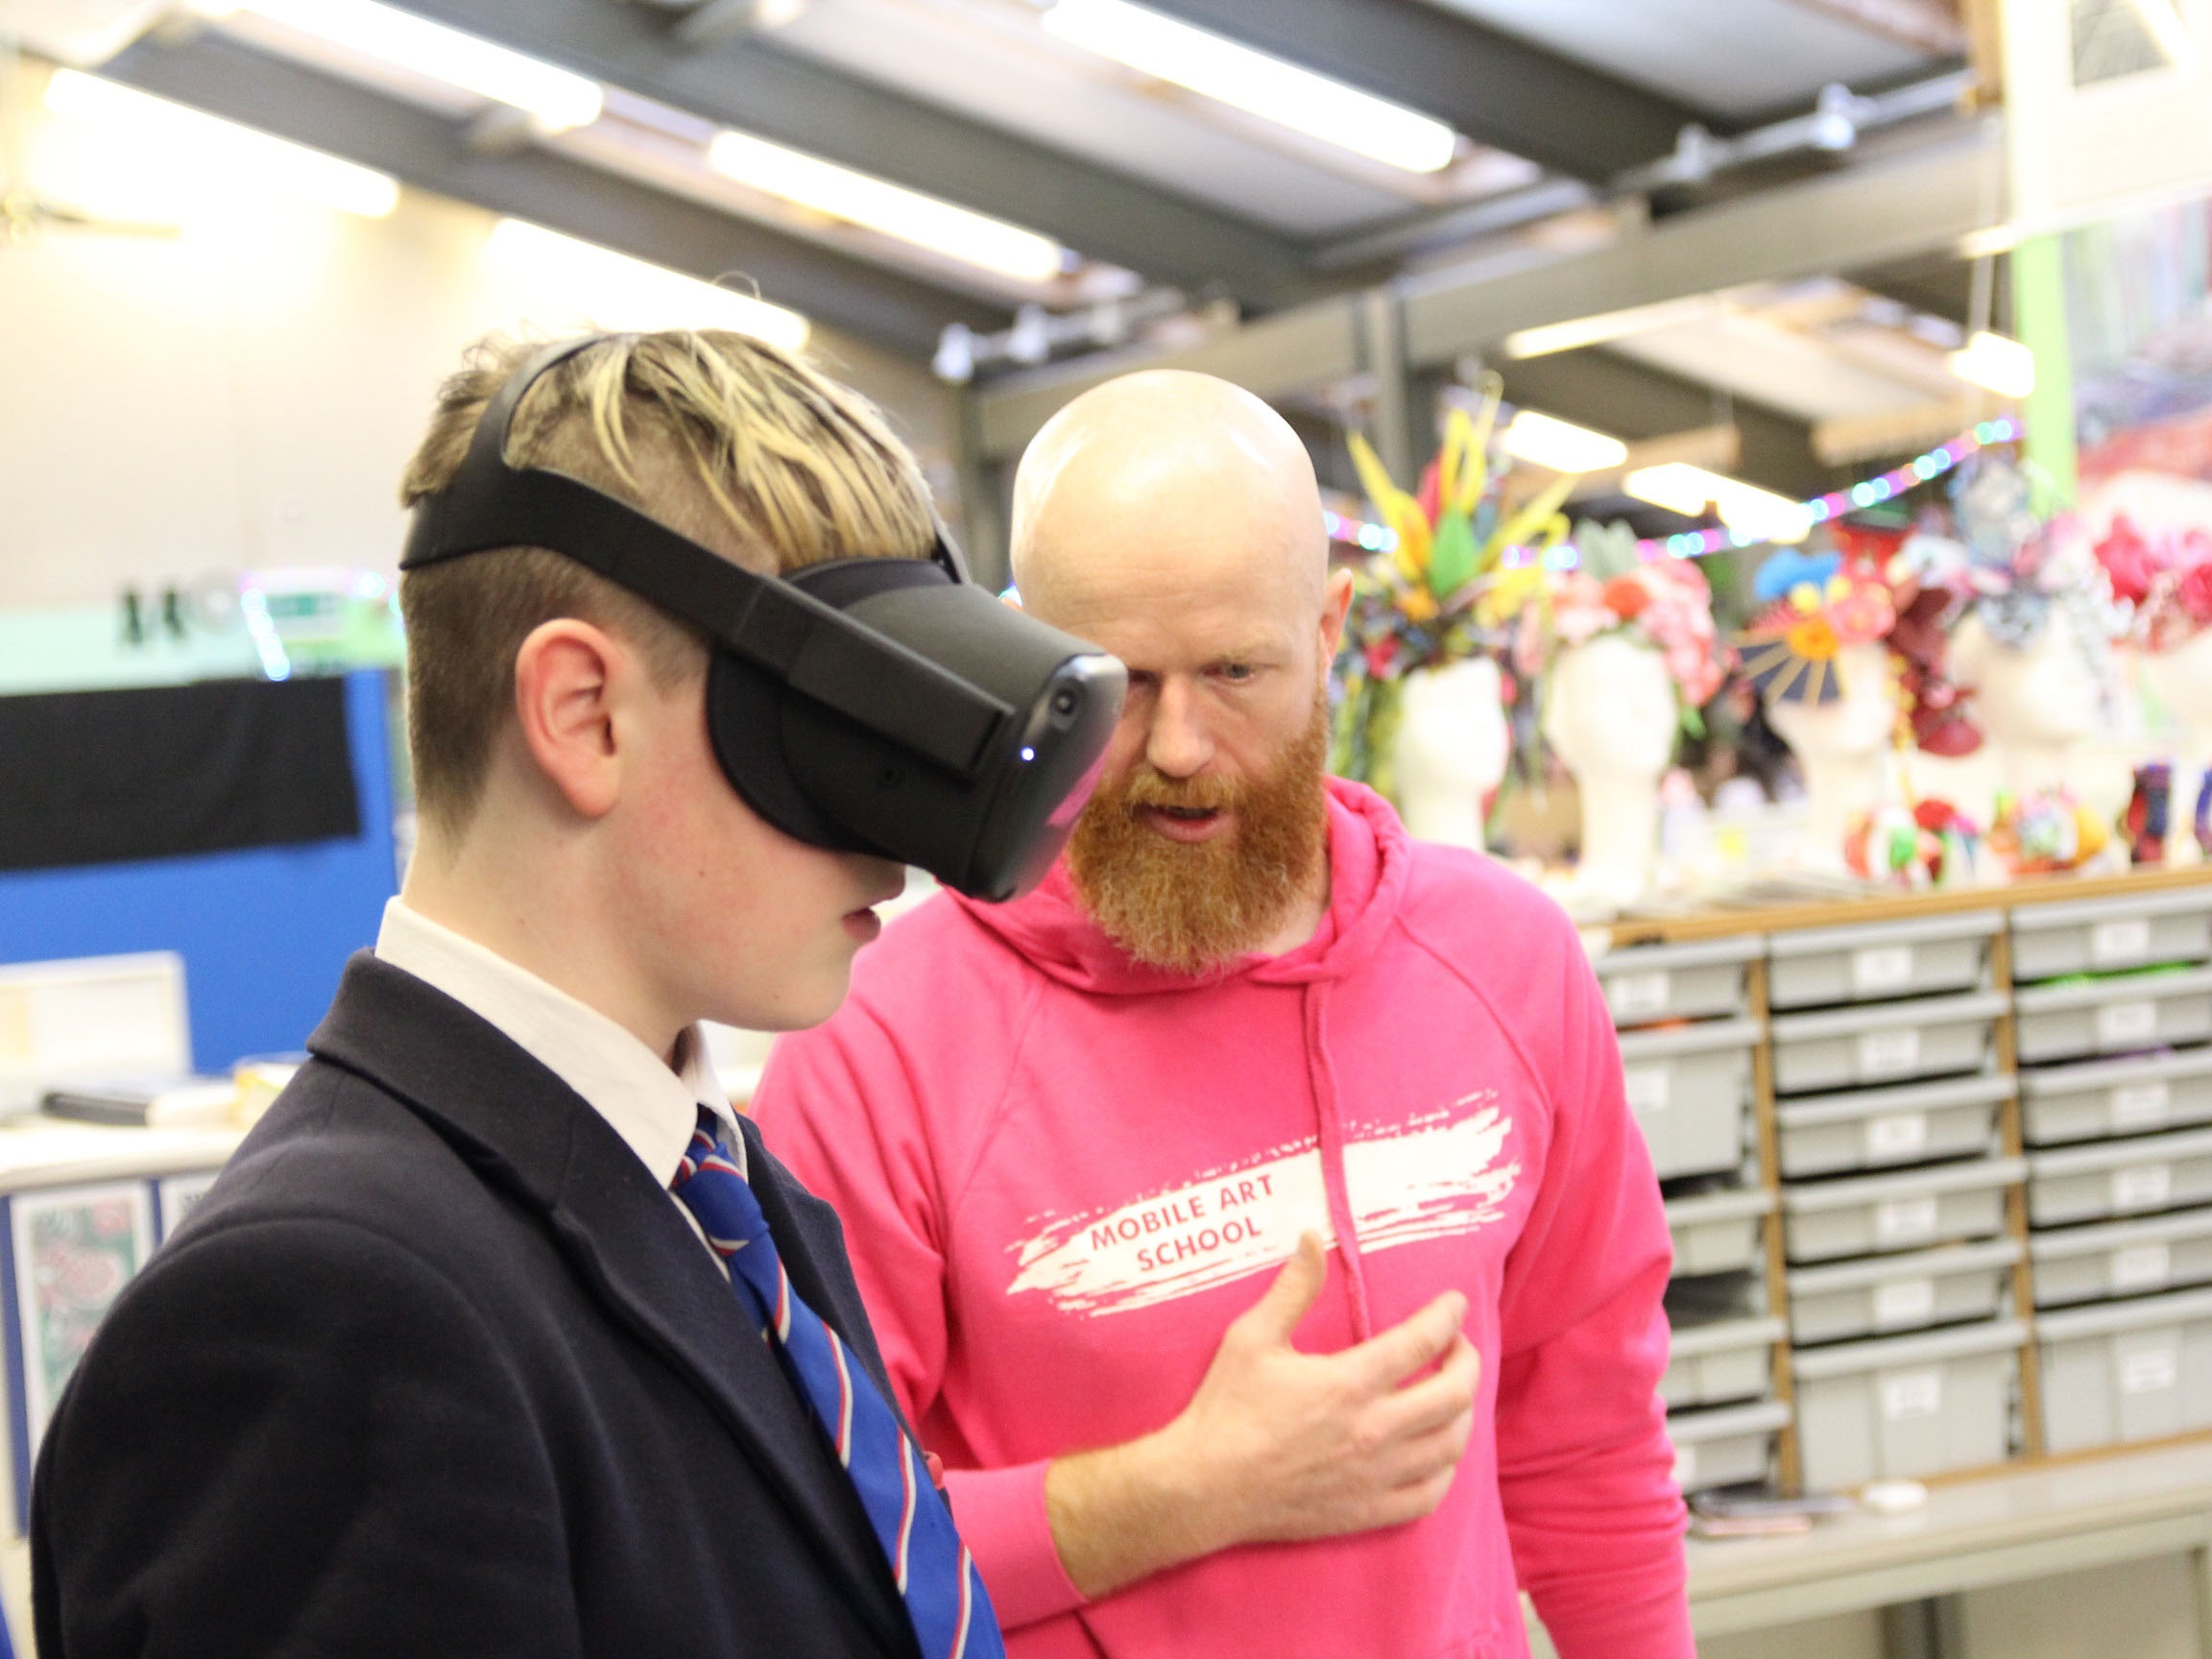 Student from Aberdeen Grammar School uses VR headset